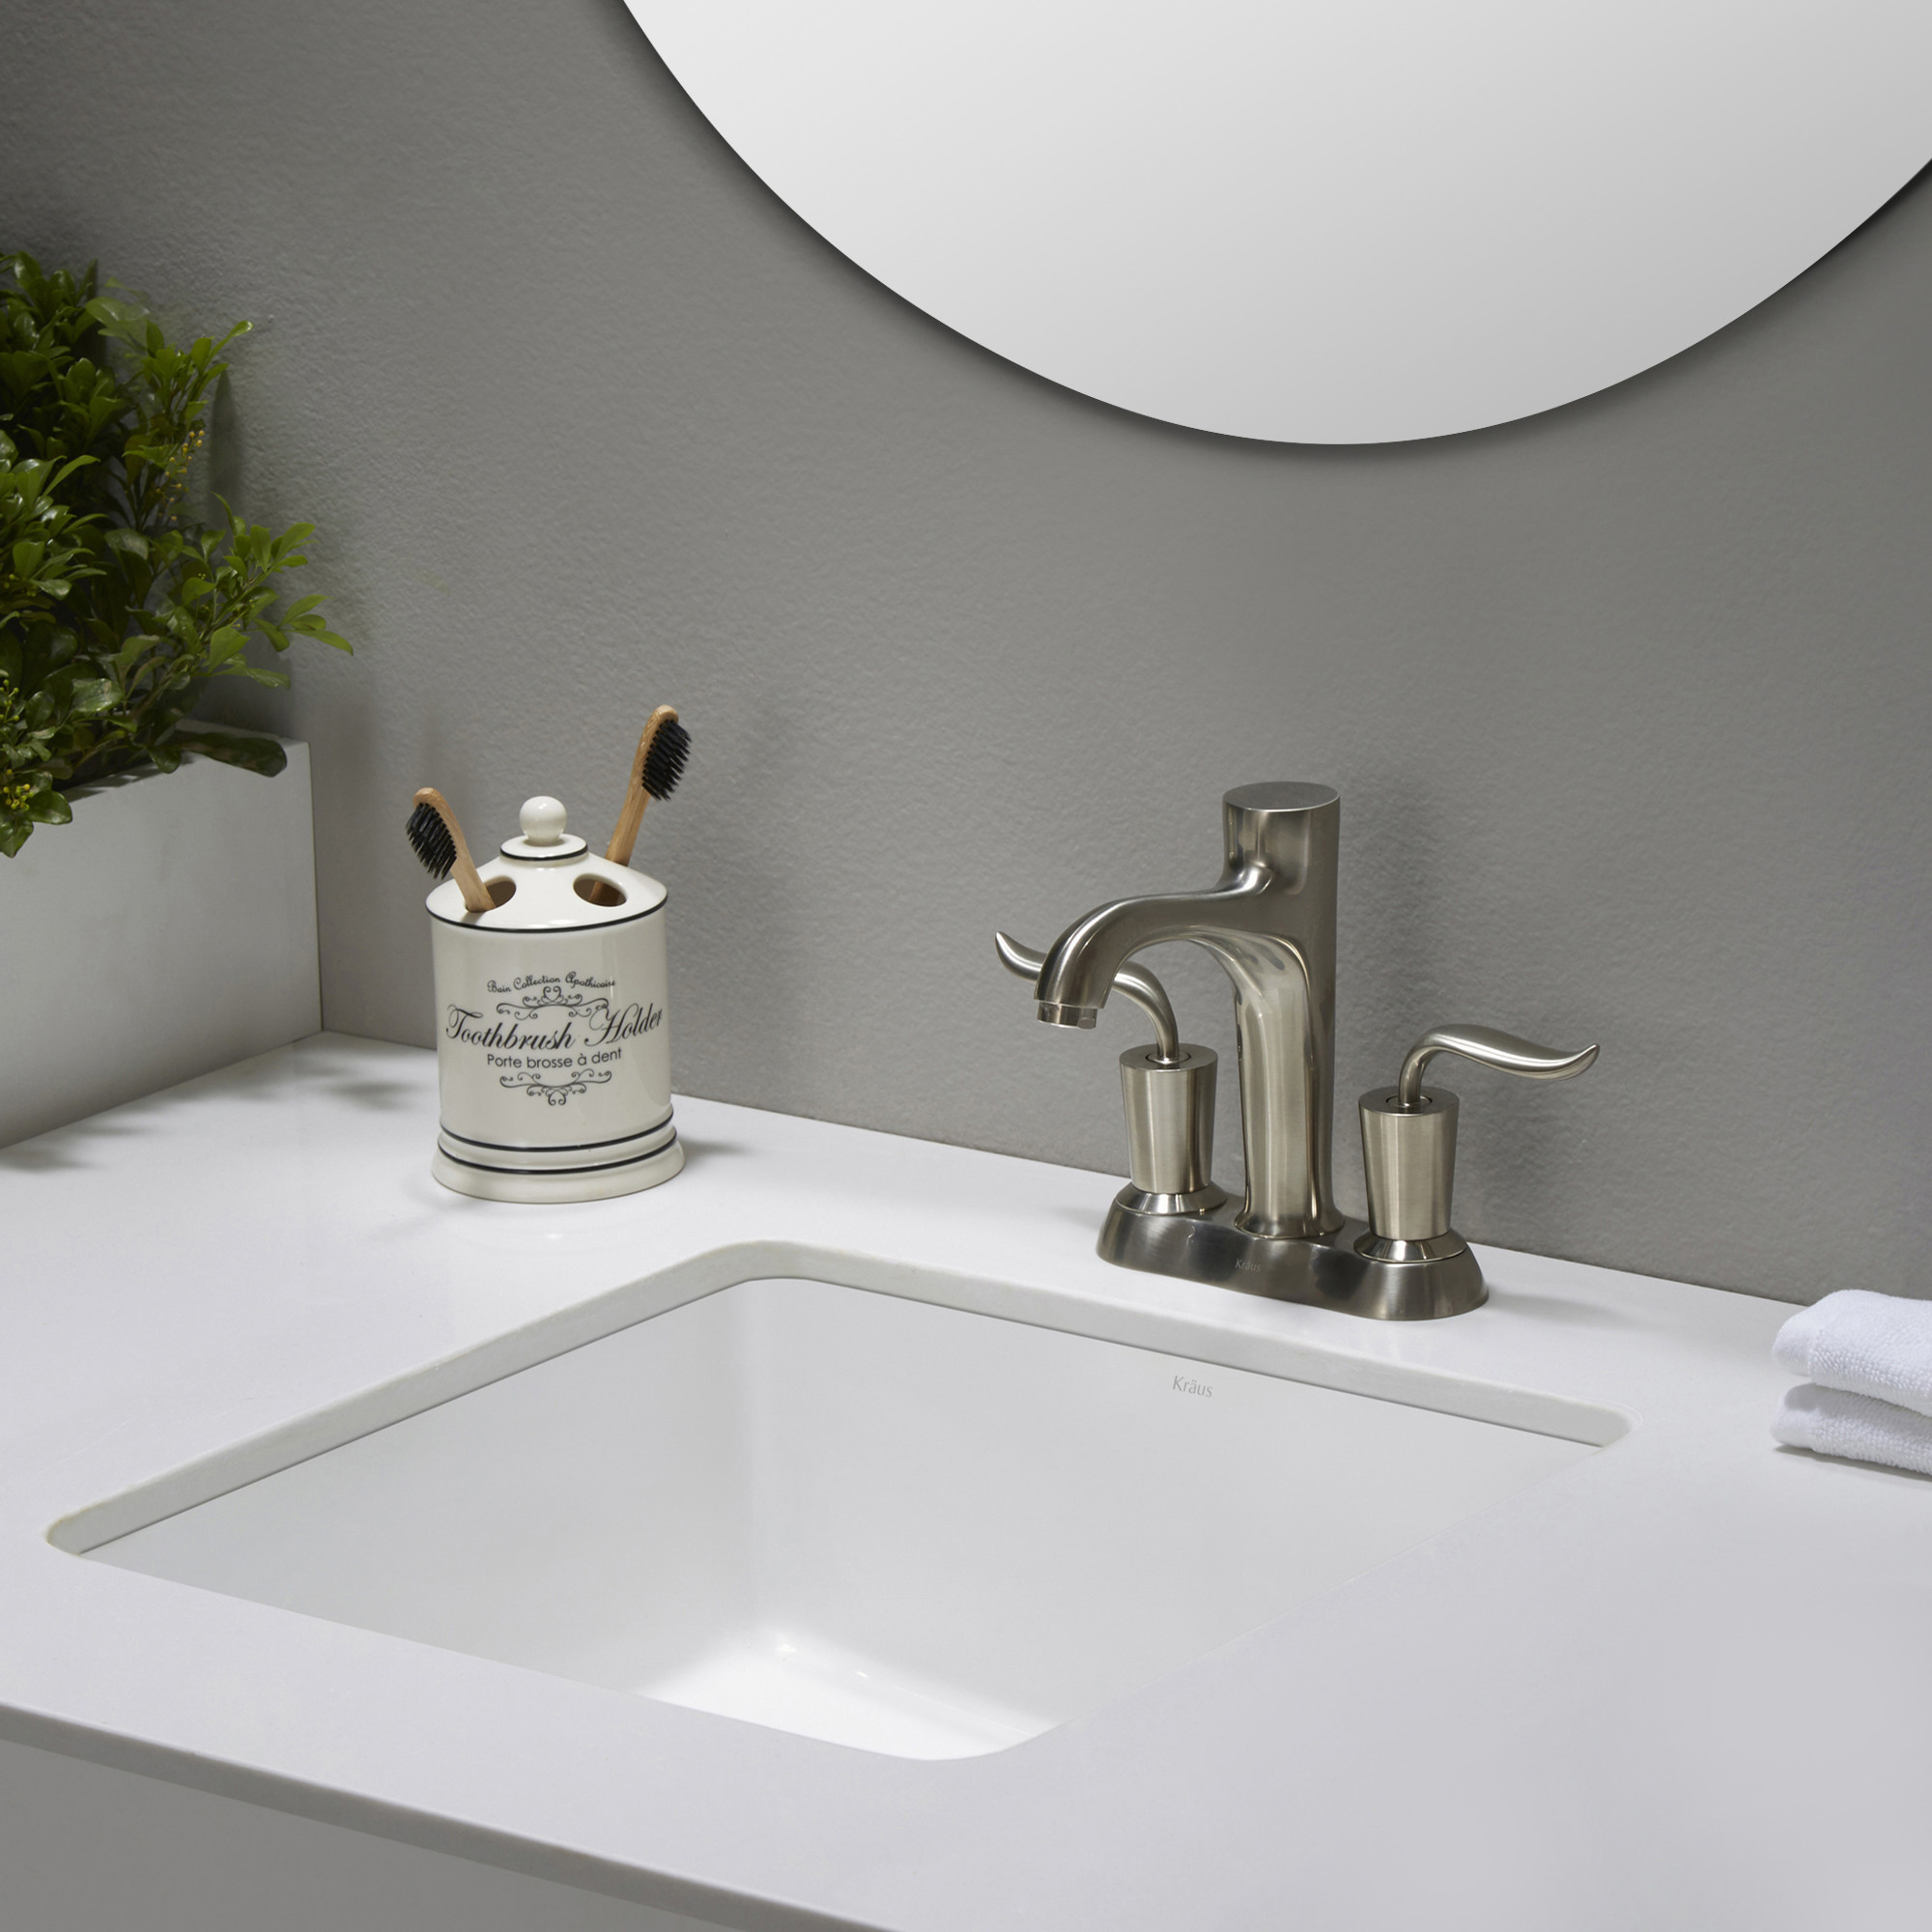 Best ideas about Undermount Bathroom Sinks
. Save or Pin Kraus Elavo™ Ceramic Square Undermount Bathroom Sink with Now.